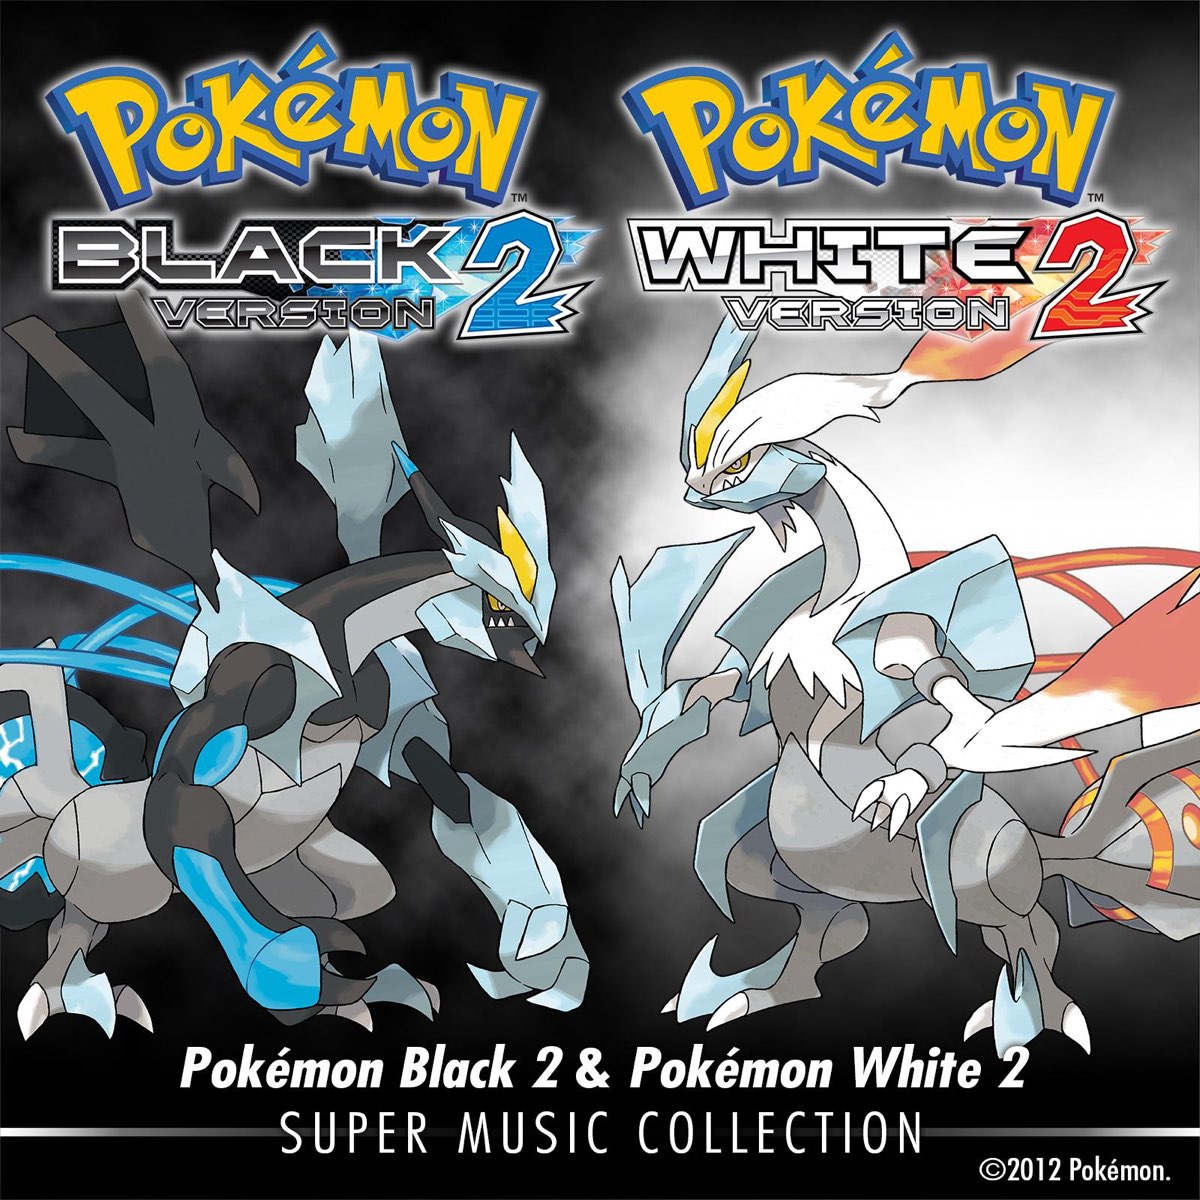 ‎Pokémon Black 2 & Pokémon White 2: Super Music Collection by GAME